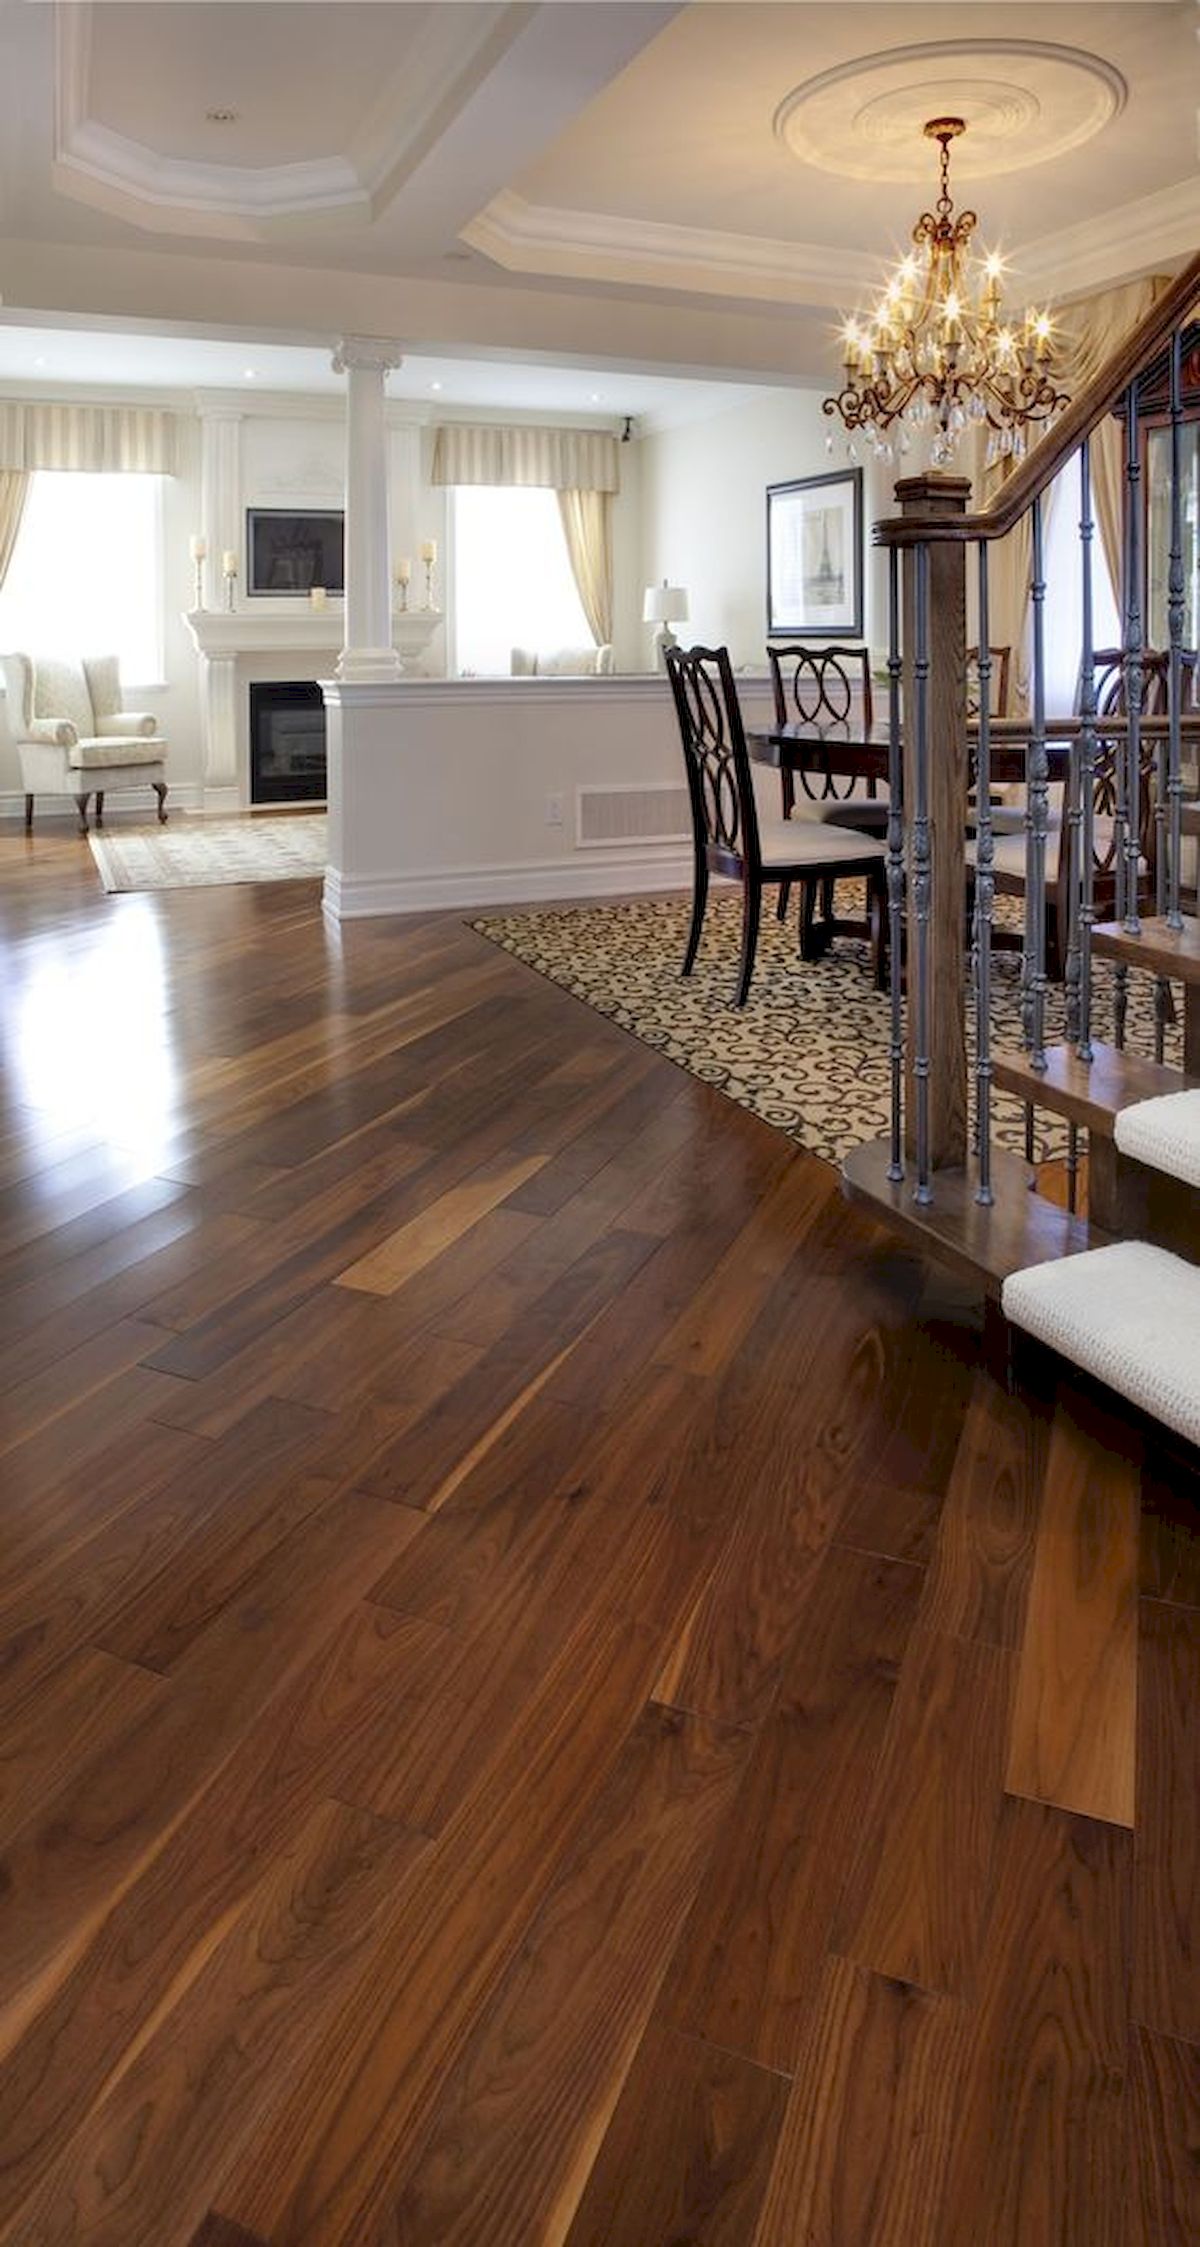 80 Gorgeous Hardwood Floor Ideas For Interior Home (2)